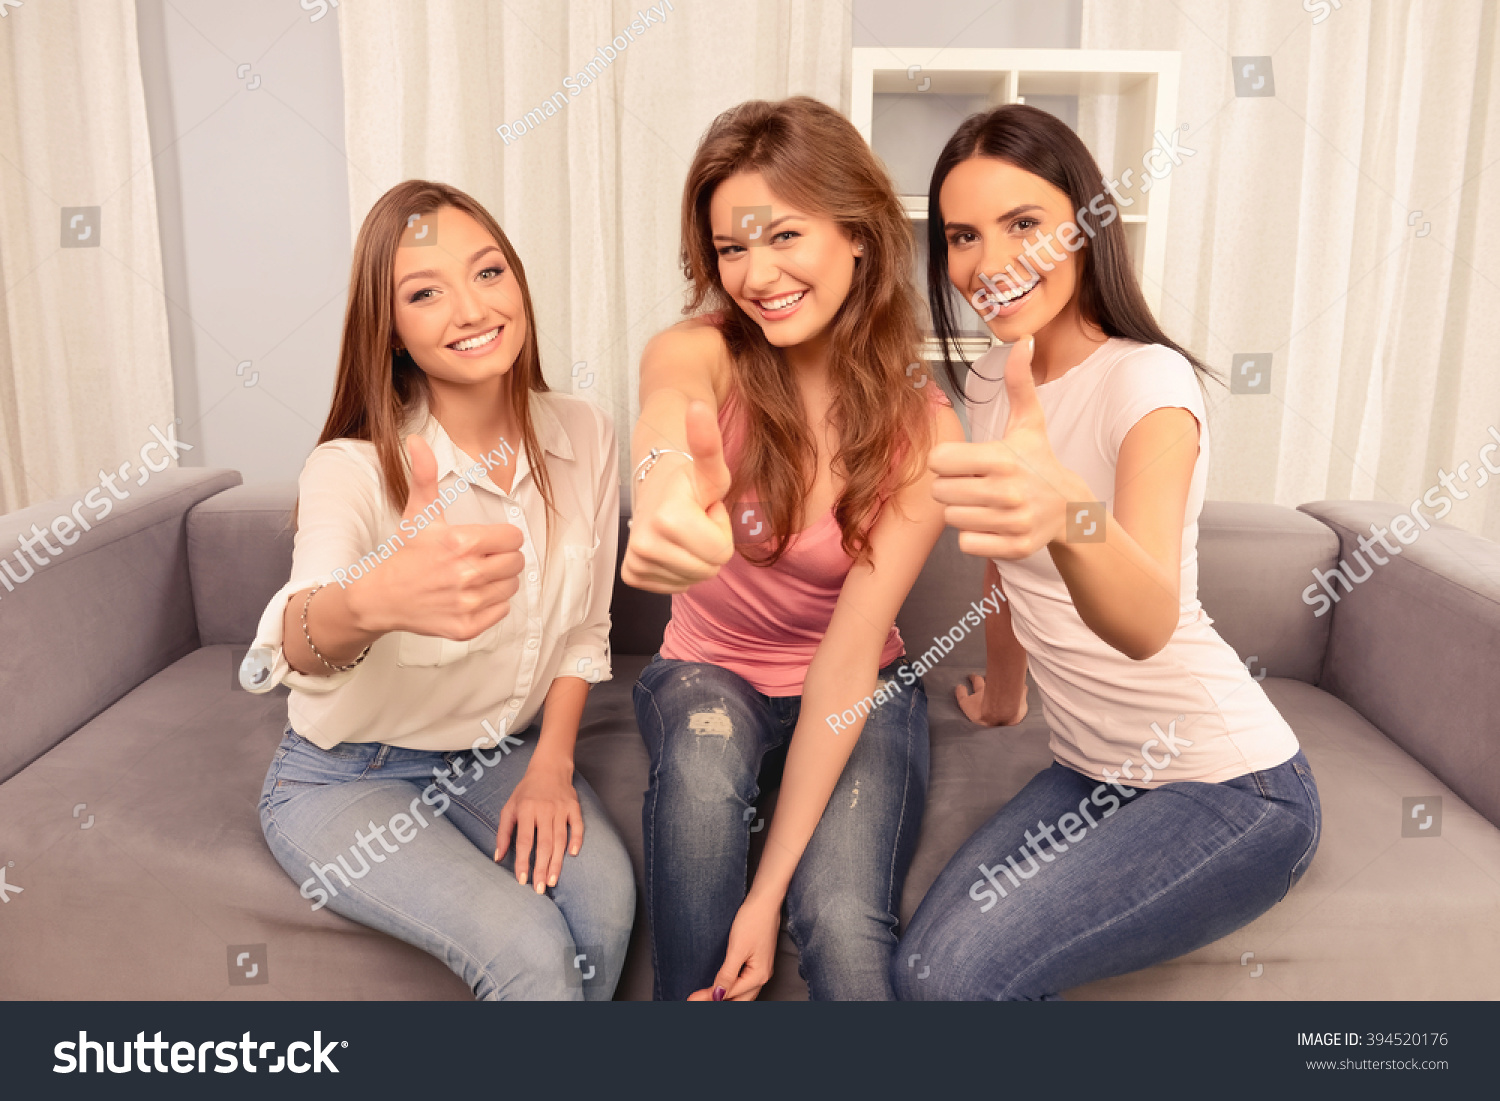 Поменялись русскими подругами. Подруги на диване. Три подруги на диване. Подружки сидят на диване. Две красивые девушки на диване.